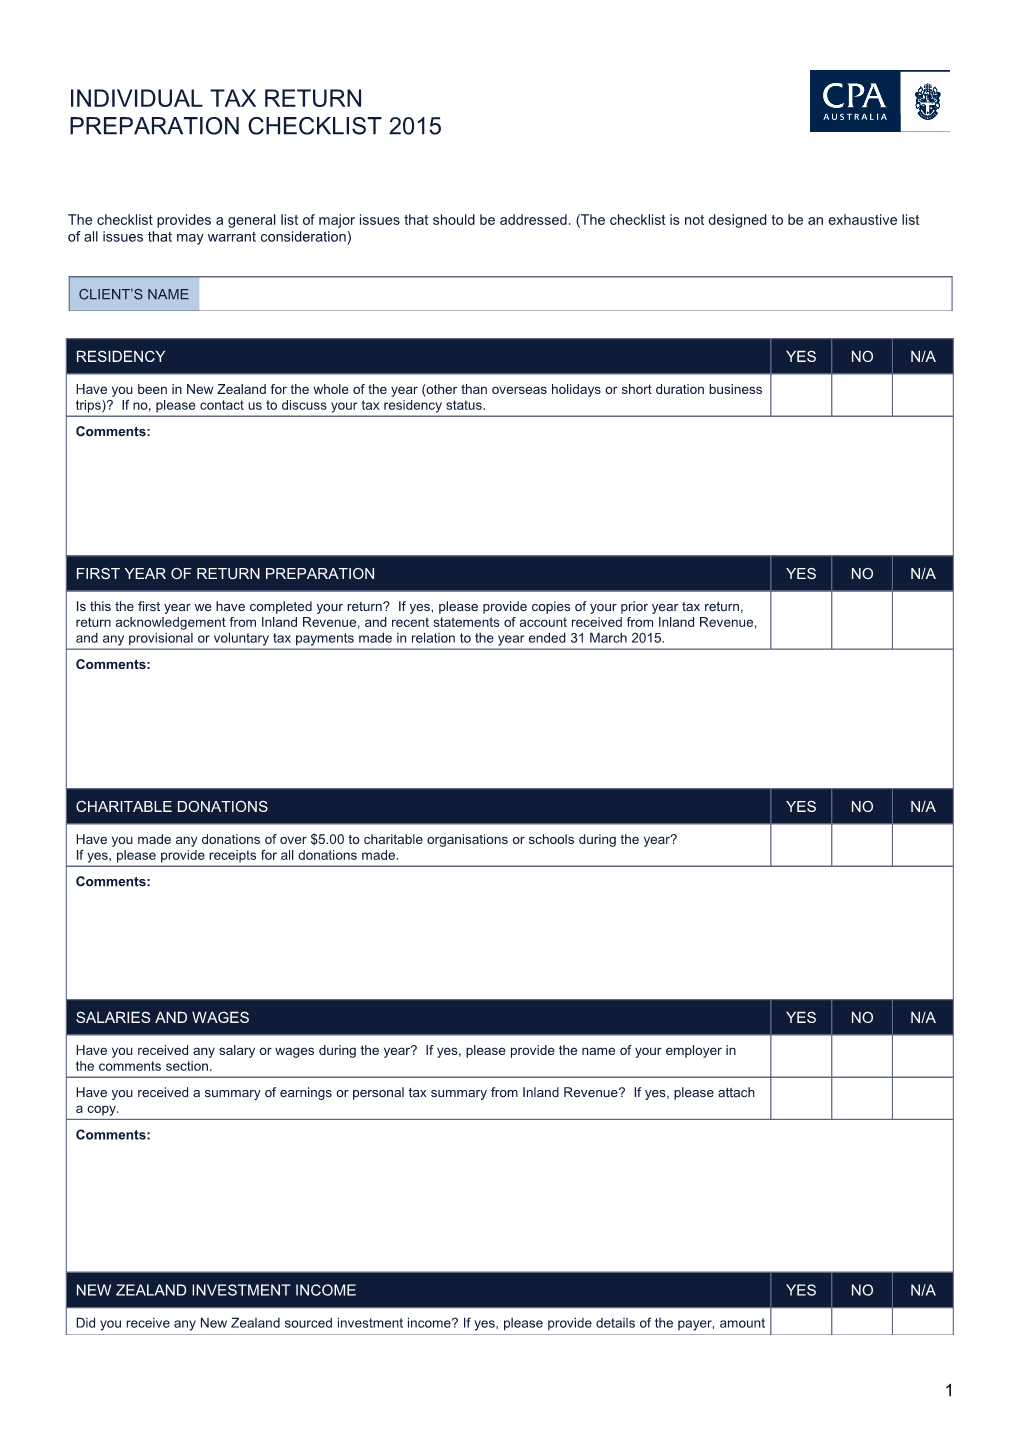 Individual Tax Return Preparation Checklist 2014 New Zealand